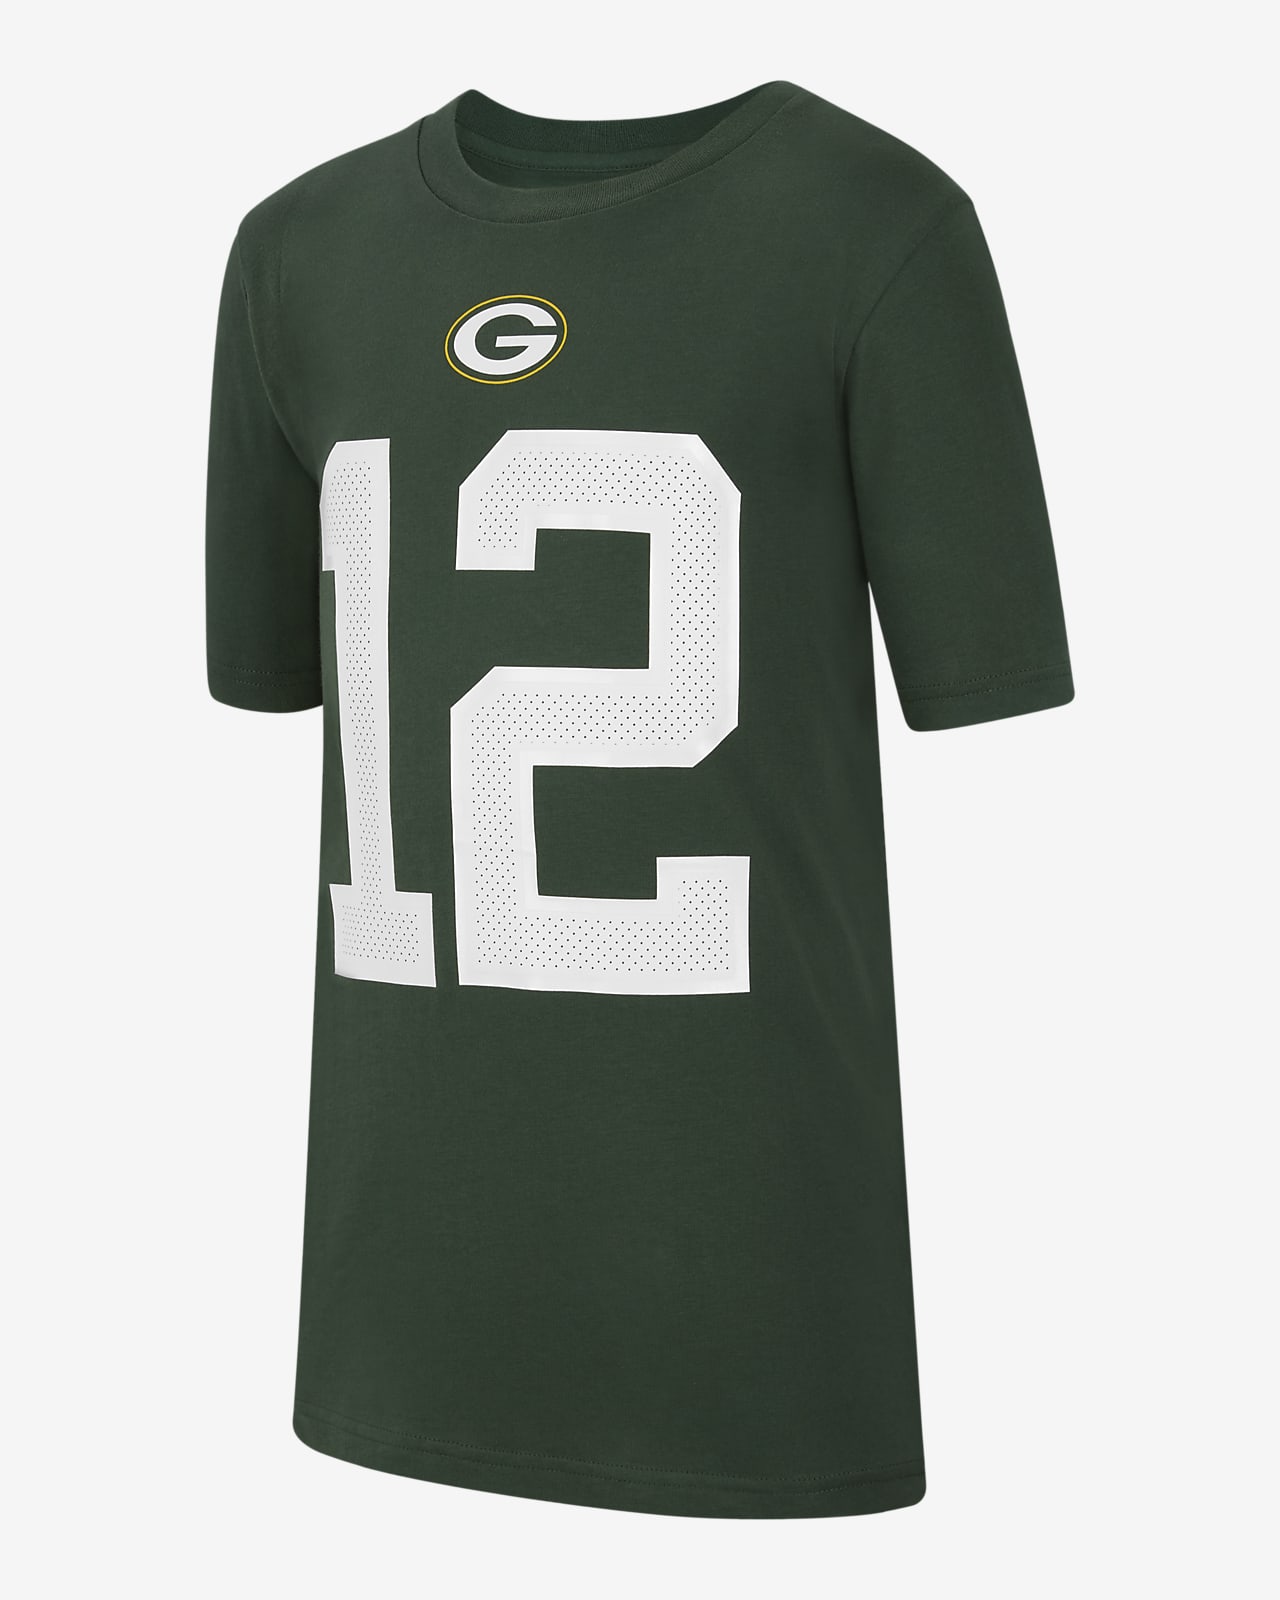 T-shirt Nike (NFL Green Bay Packers) pour ado